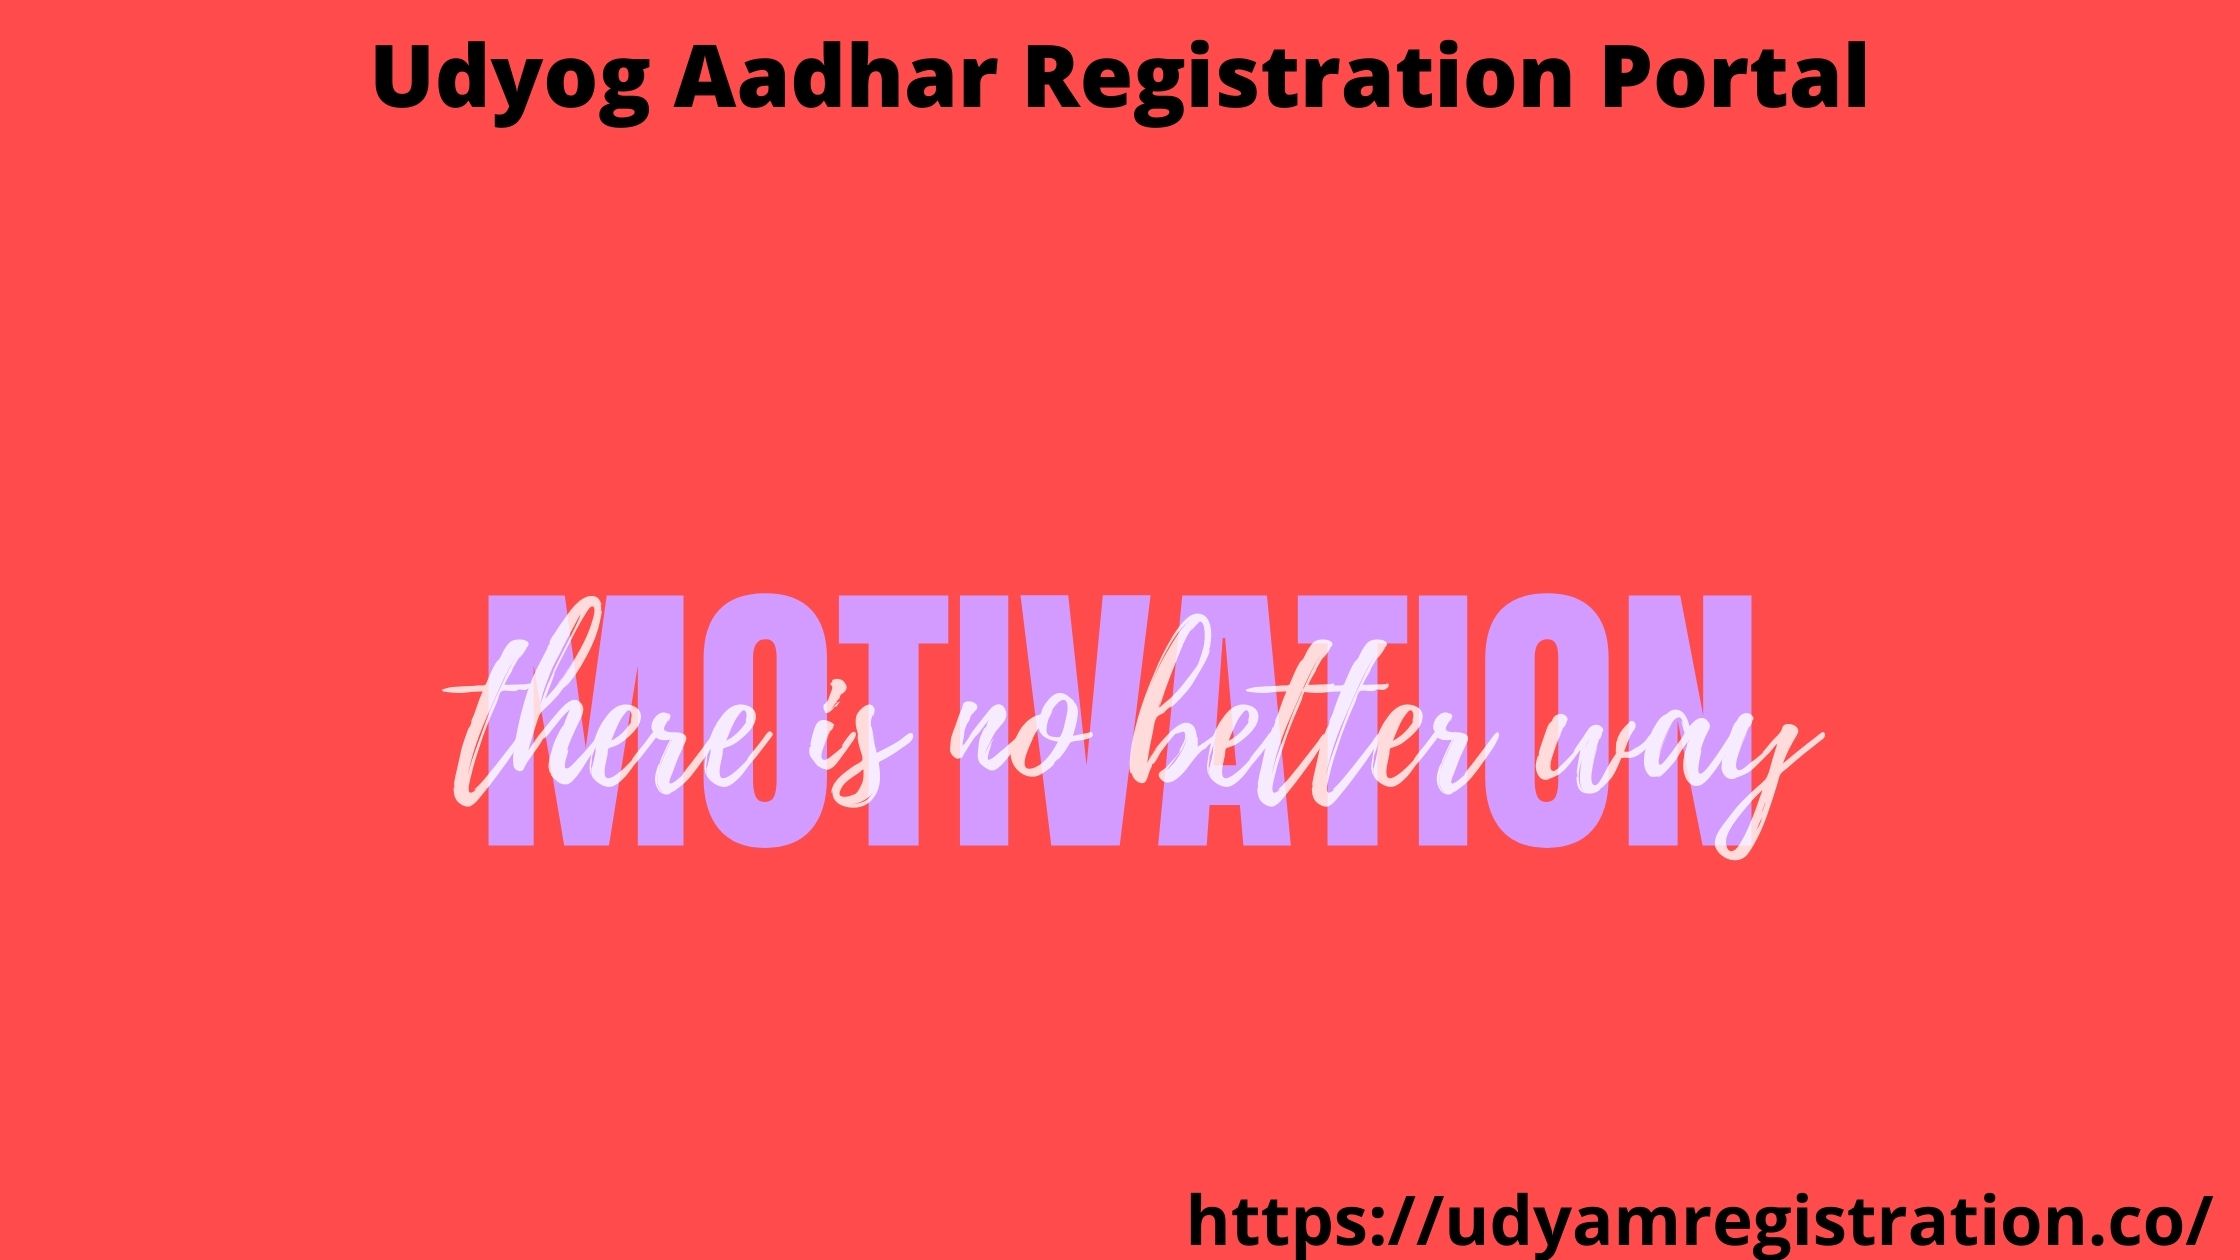 Online Udyog Aadhar Registration portal